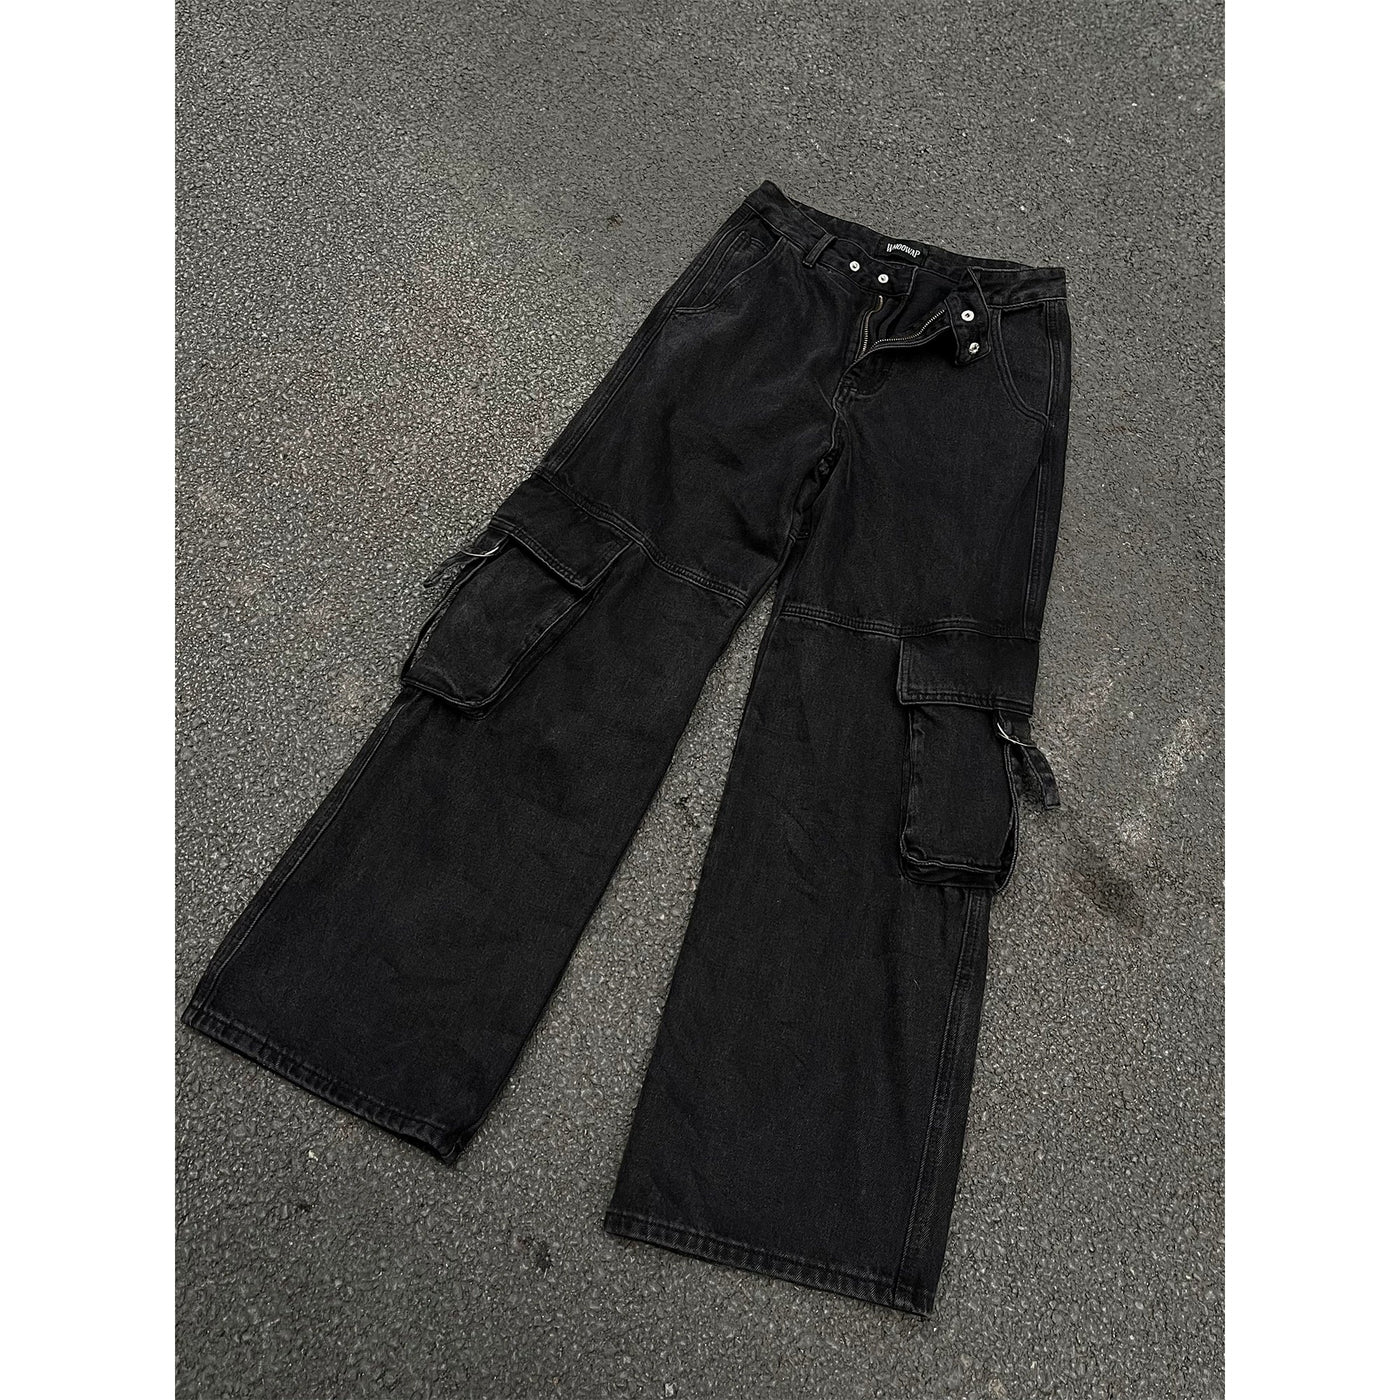 Heavy Big Pocket Cargo Jeans Korean Street Fashion Jeans By MaxDstr Shop Online at OH Vault